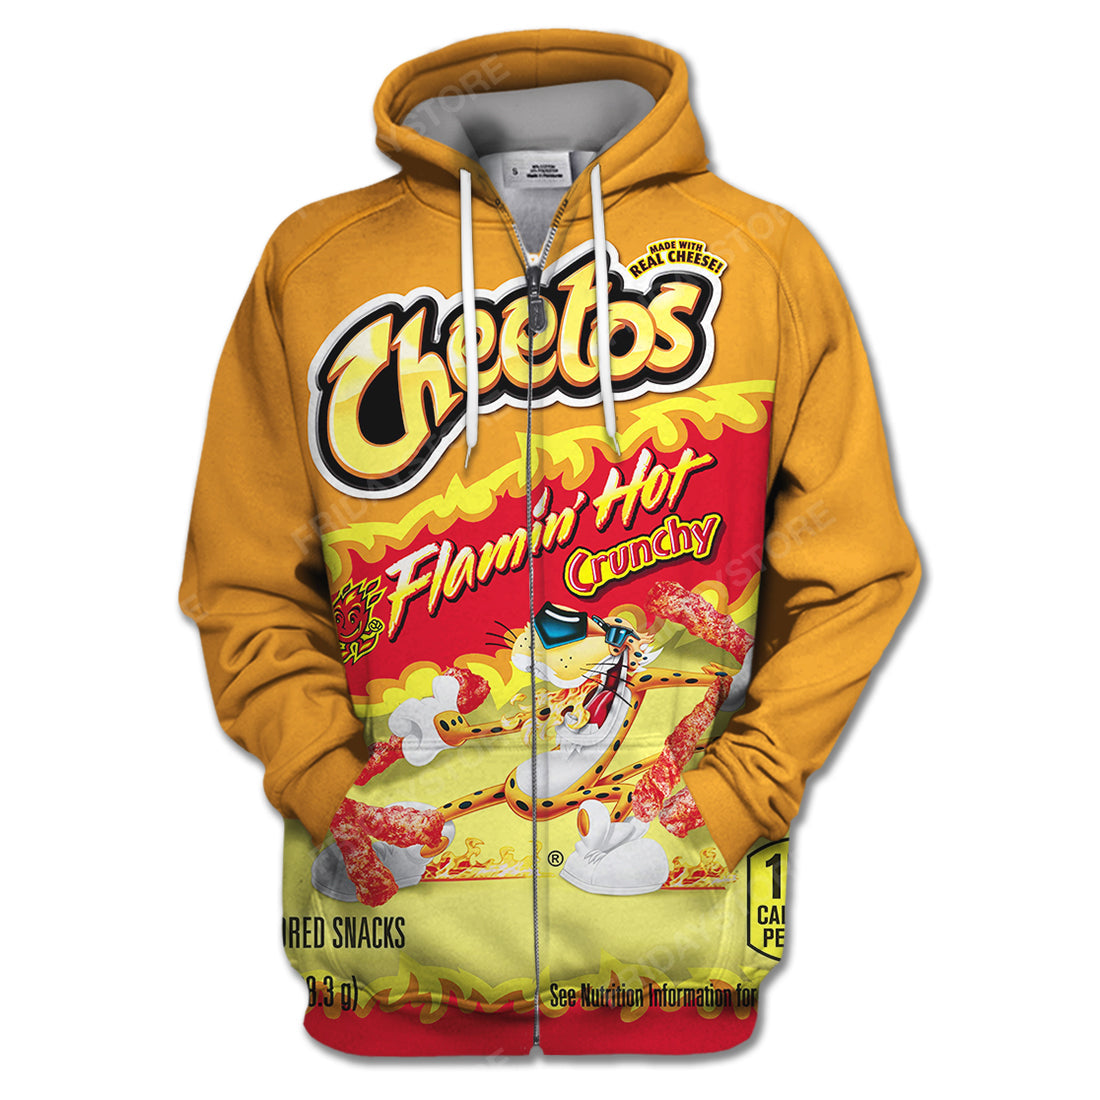 Cheetos T-shirt Cheetos Flaming Hot Crunchy Orange T-shirt Hoodie Adult Full Size Full Print